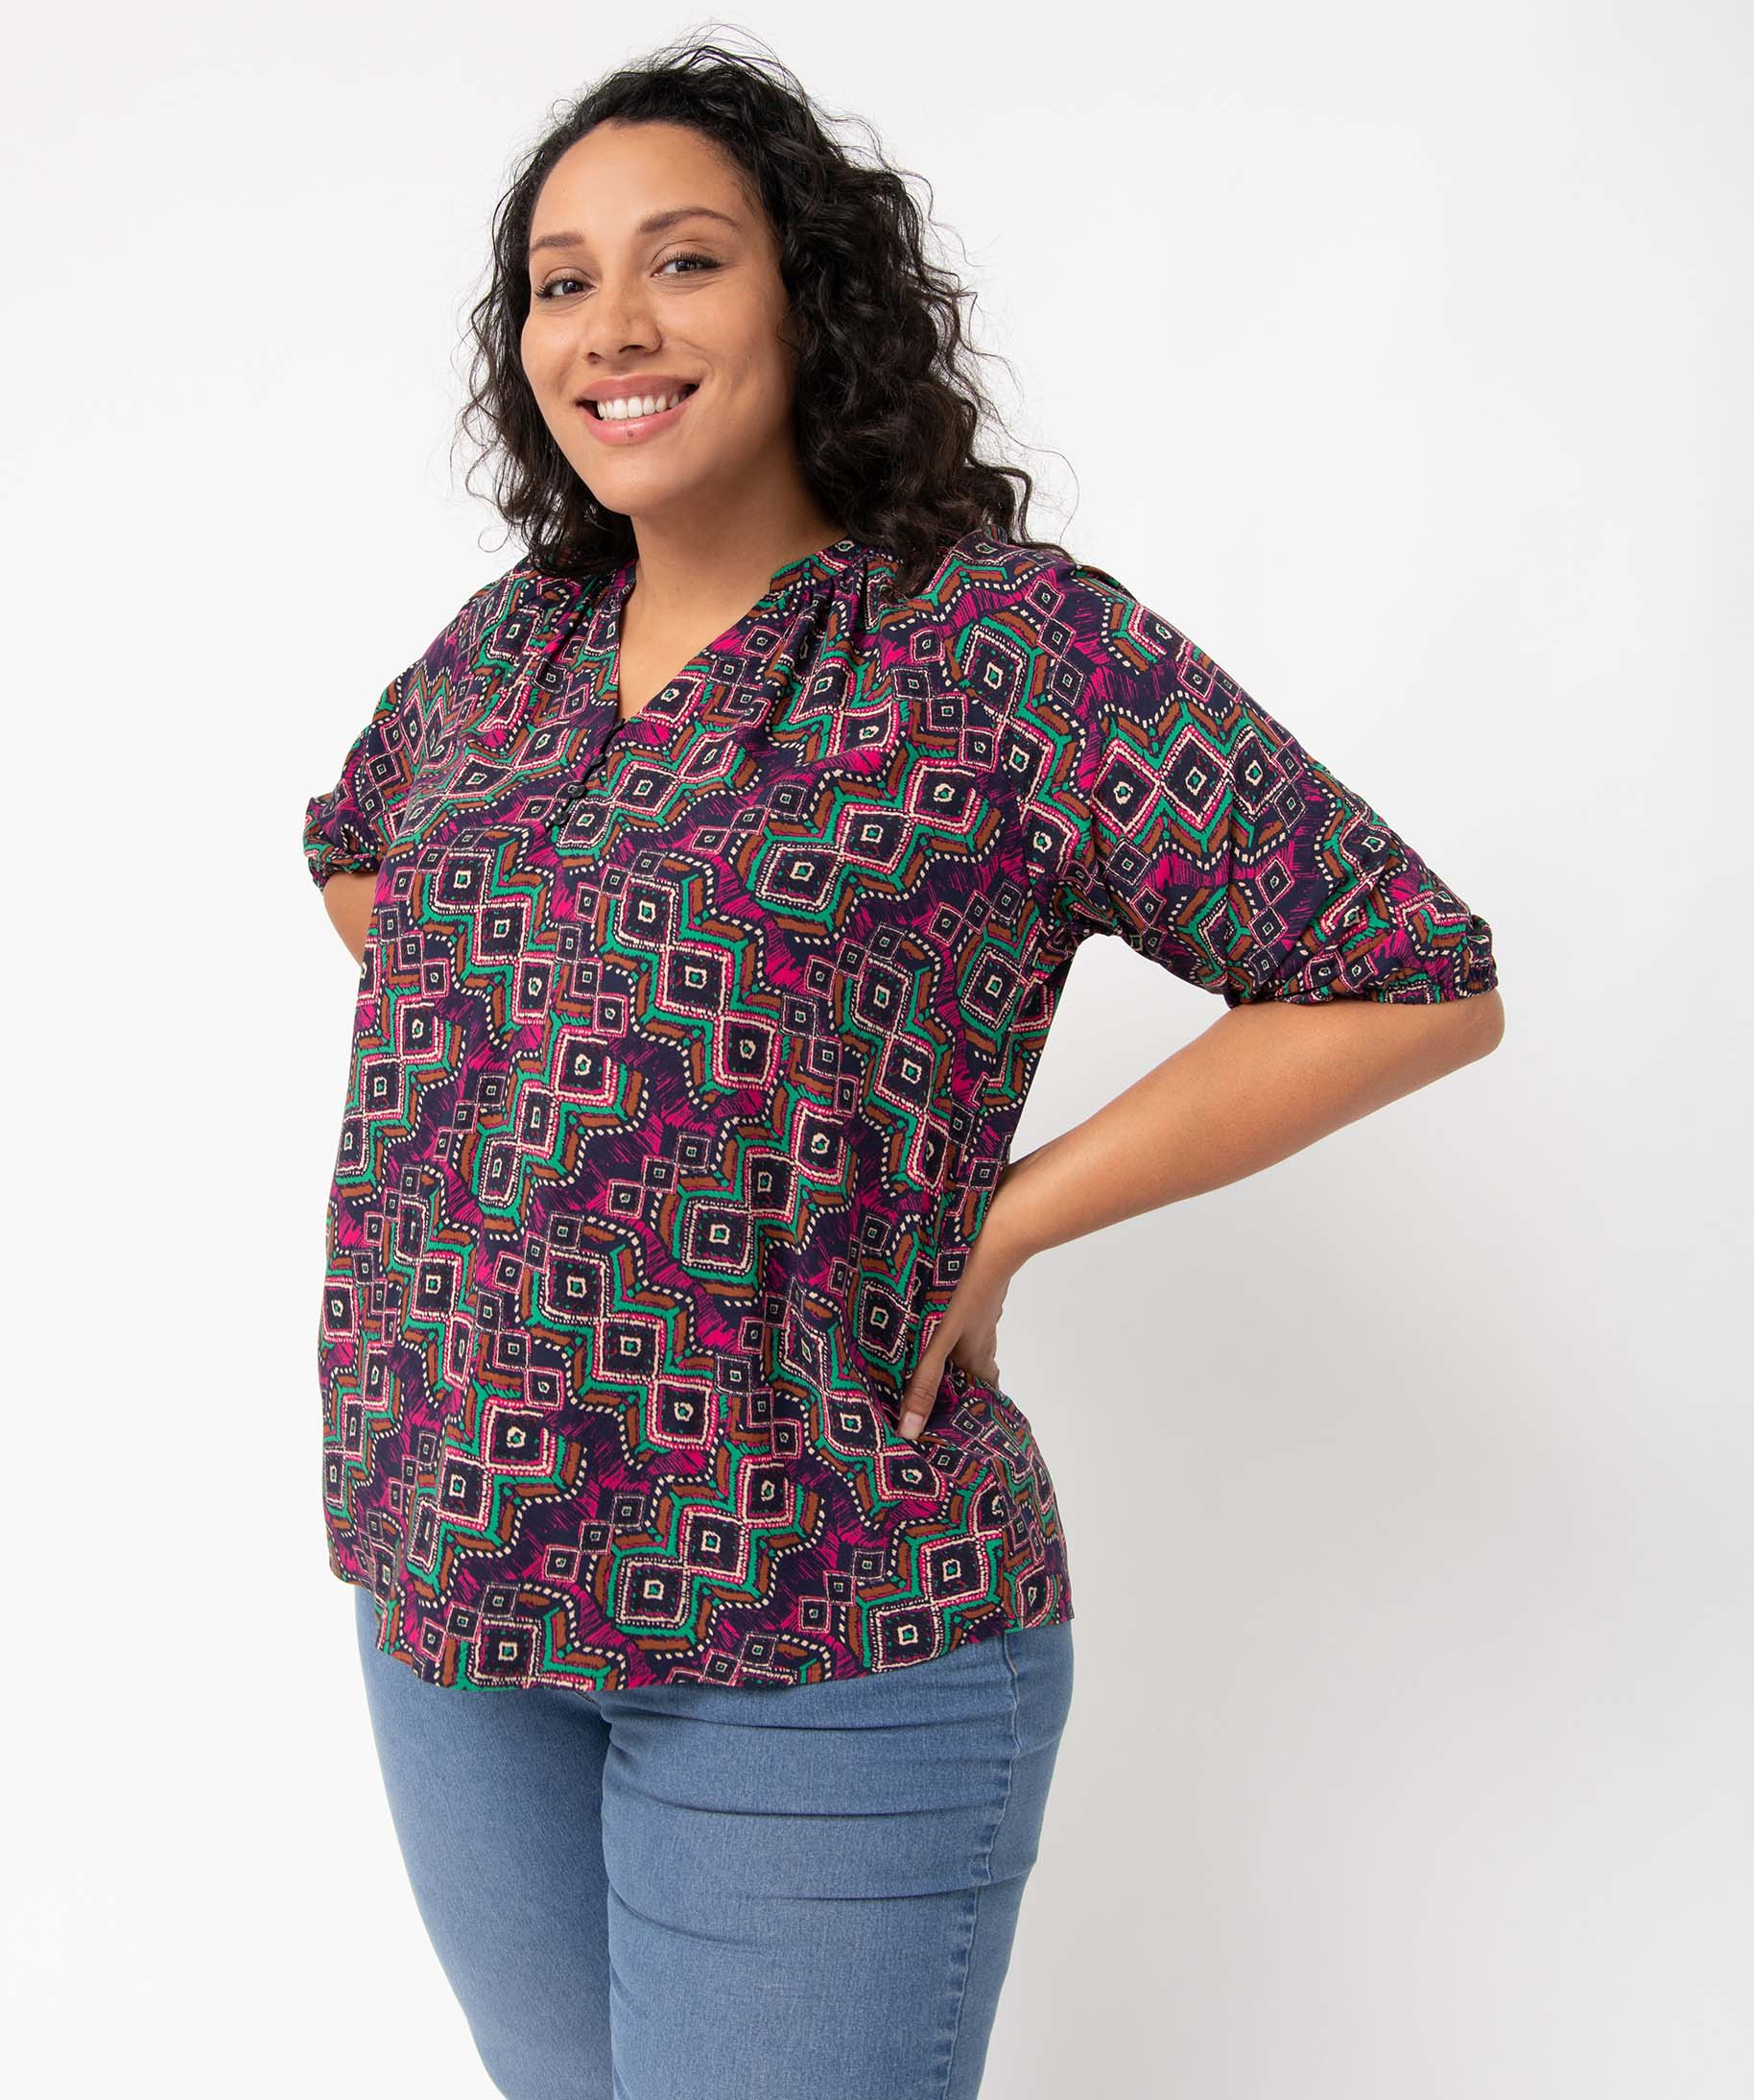 blouse femme grande taille imprimee a manches 34 multicolore chemisiers et blouses